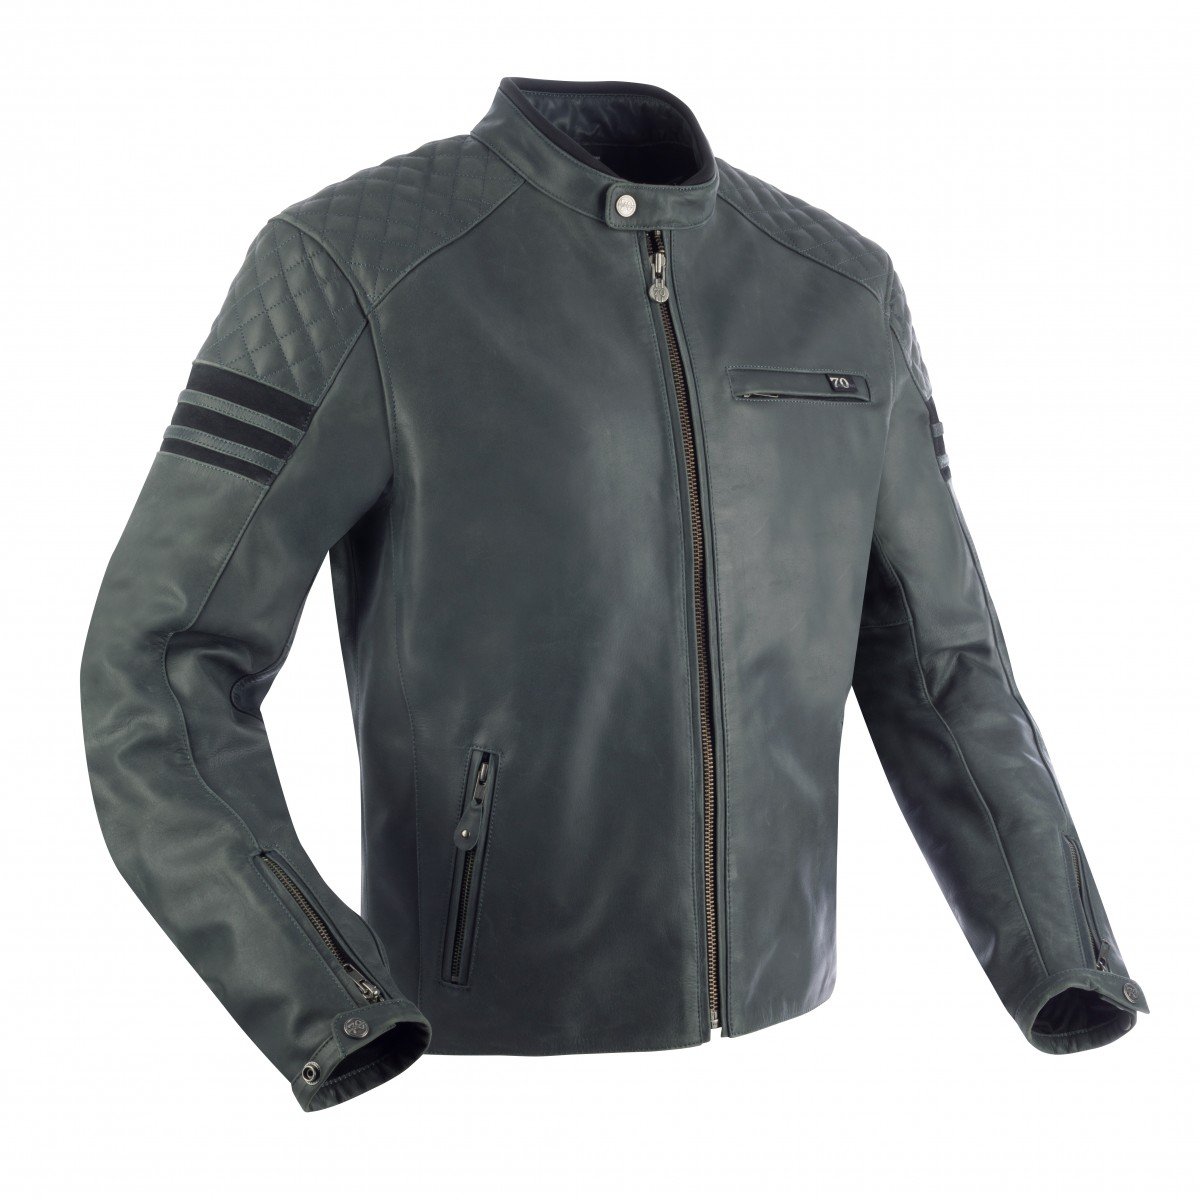 Image of Segura Track Jacket Gray Black Size XL ID 3660815171912